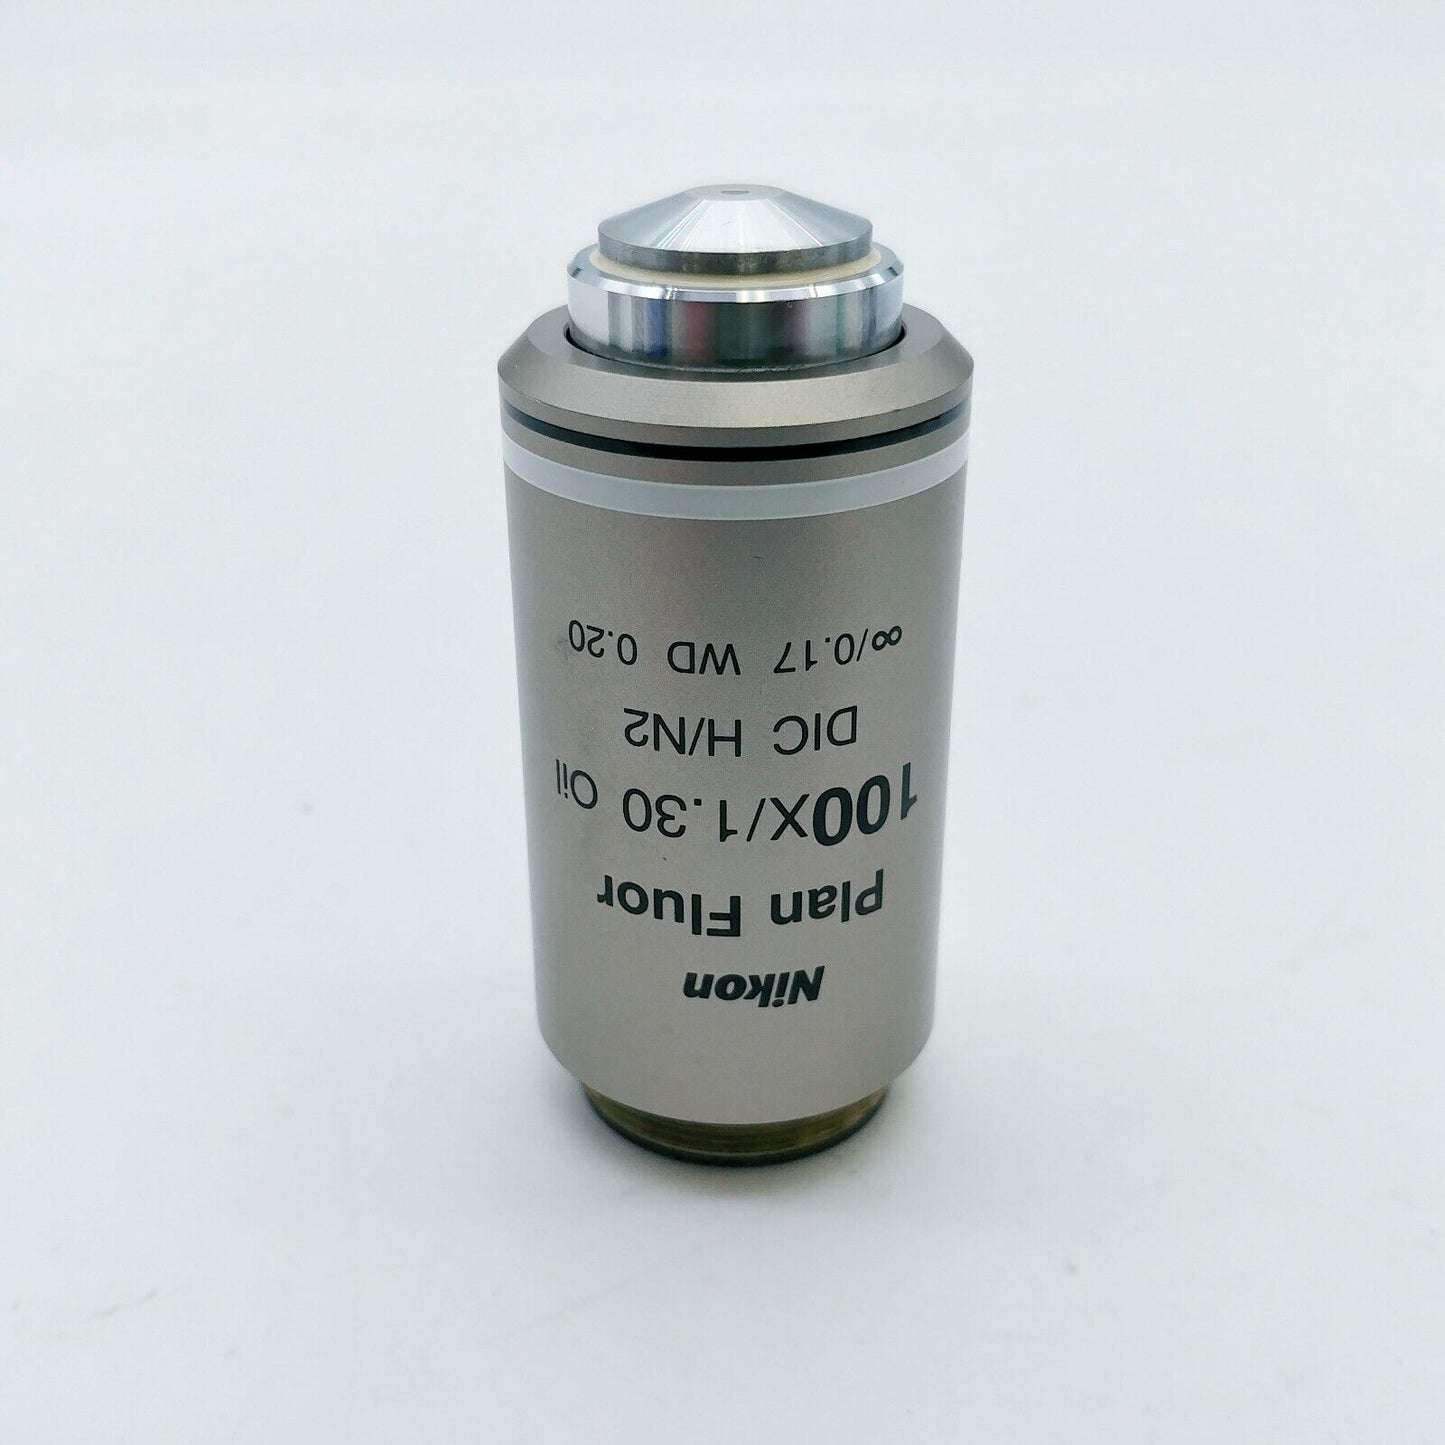 Nikon Microscope Objective CFI Plan Fluor 100x 1.30 Oil DIC H/N2 ∞/0.17 - microscopemarketplace